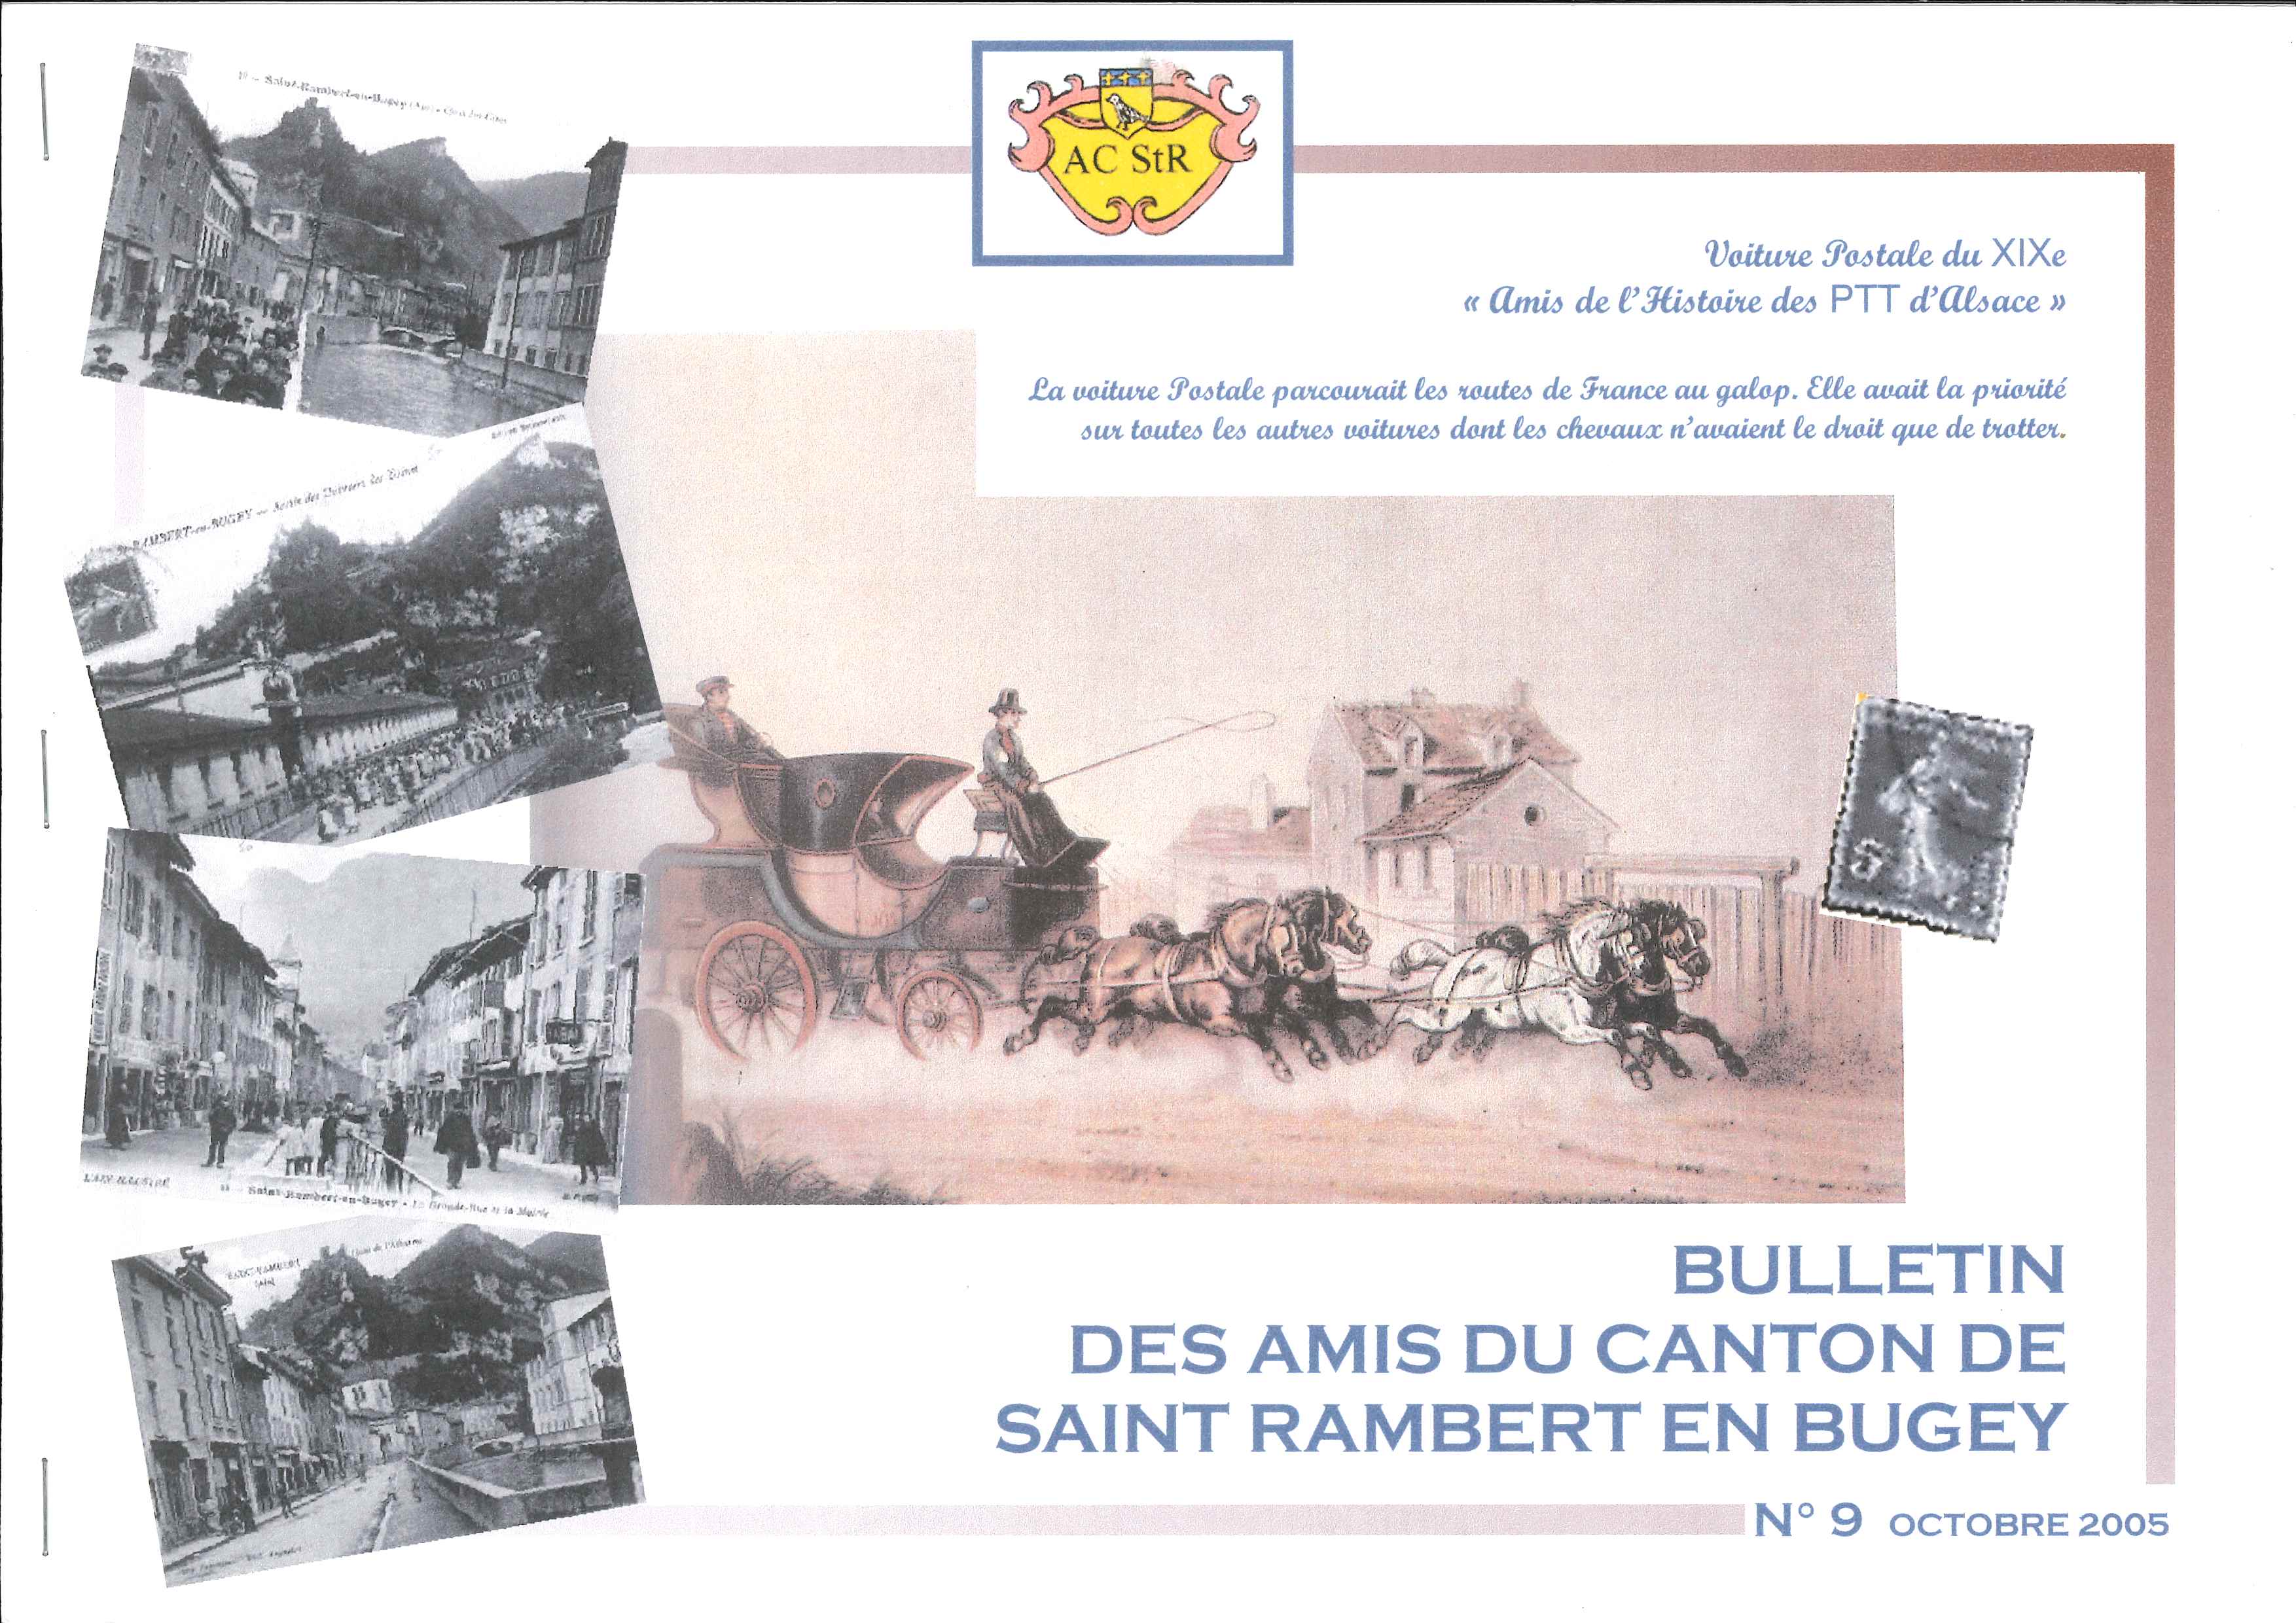 Bulletin des amis du canton de Saint Rambert en Bugey n9 